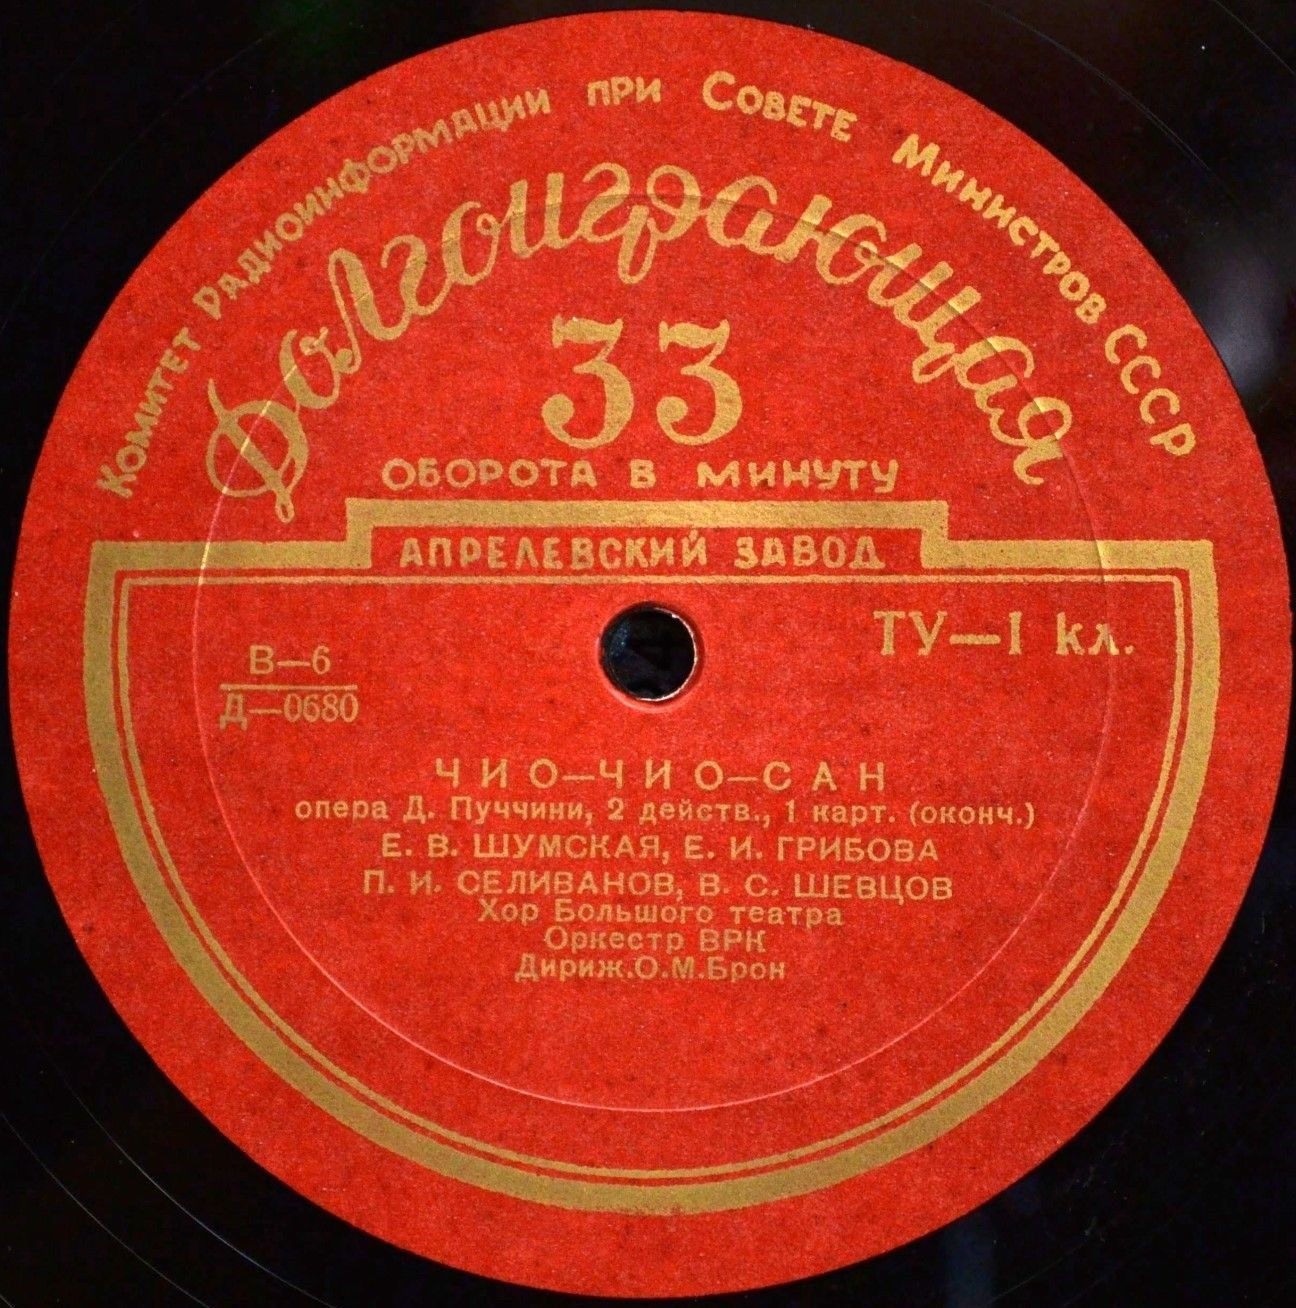 Дж. ПУЧЧИНИ (1858–1924): «Чио-Чио-сан», опера в 2 д. (О. Брон)